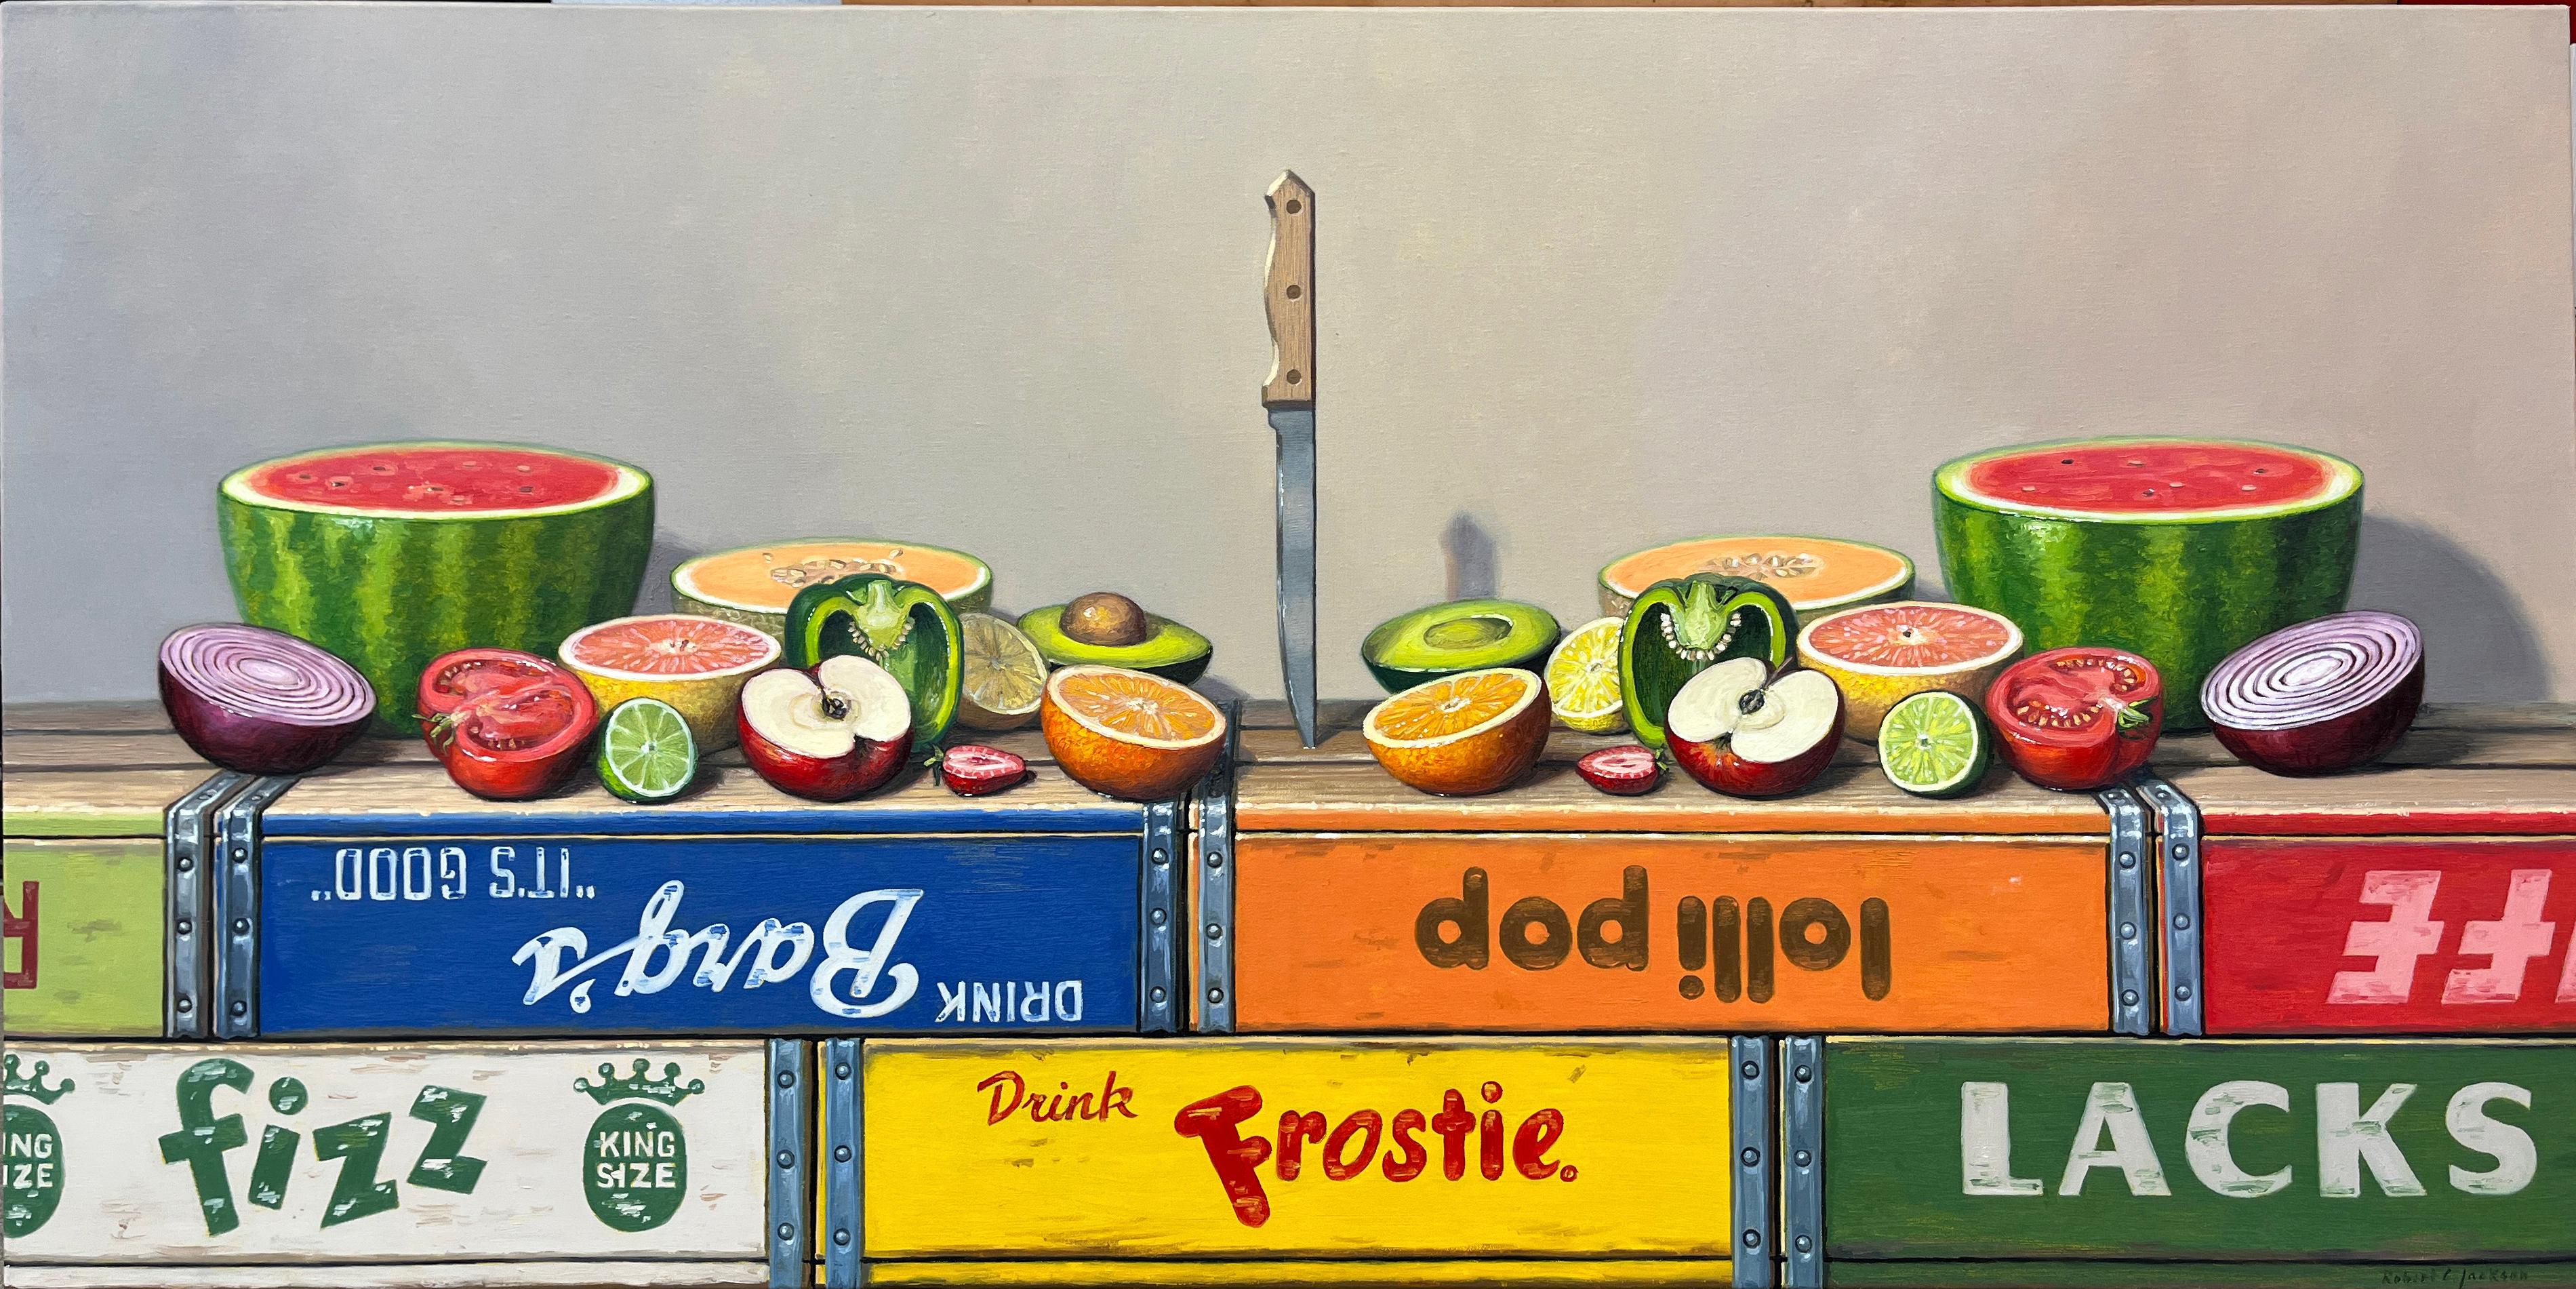 HALFSIES - Contemporary Realism / Food Art / Still Life - Painting by Robert C. Jackson